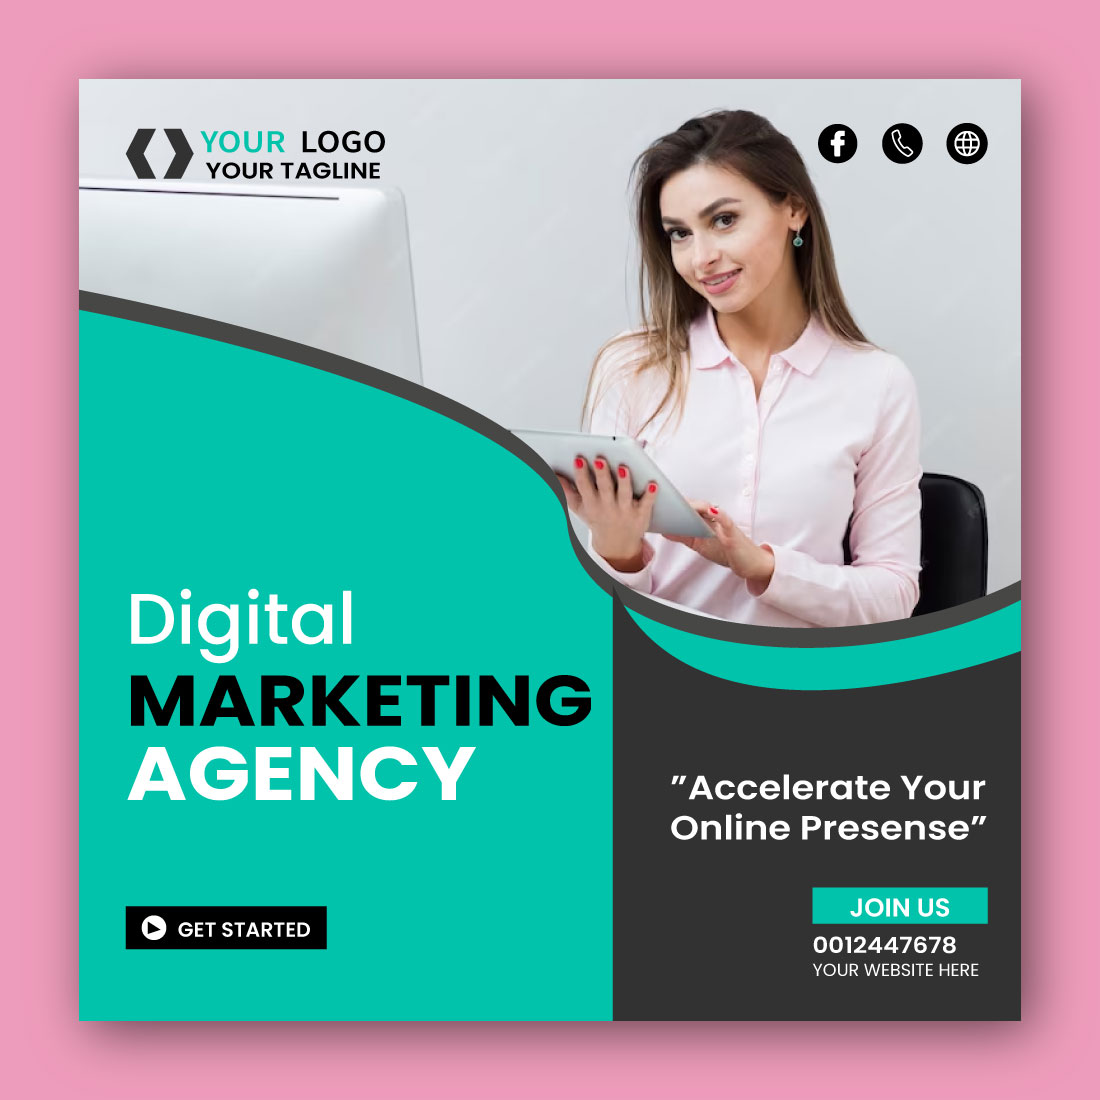 Digital Marketing Agency Social Media Post Design preview image.